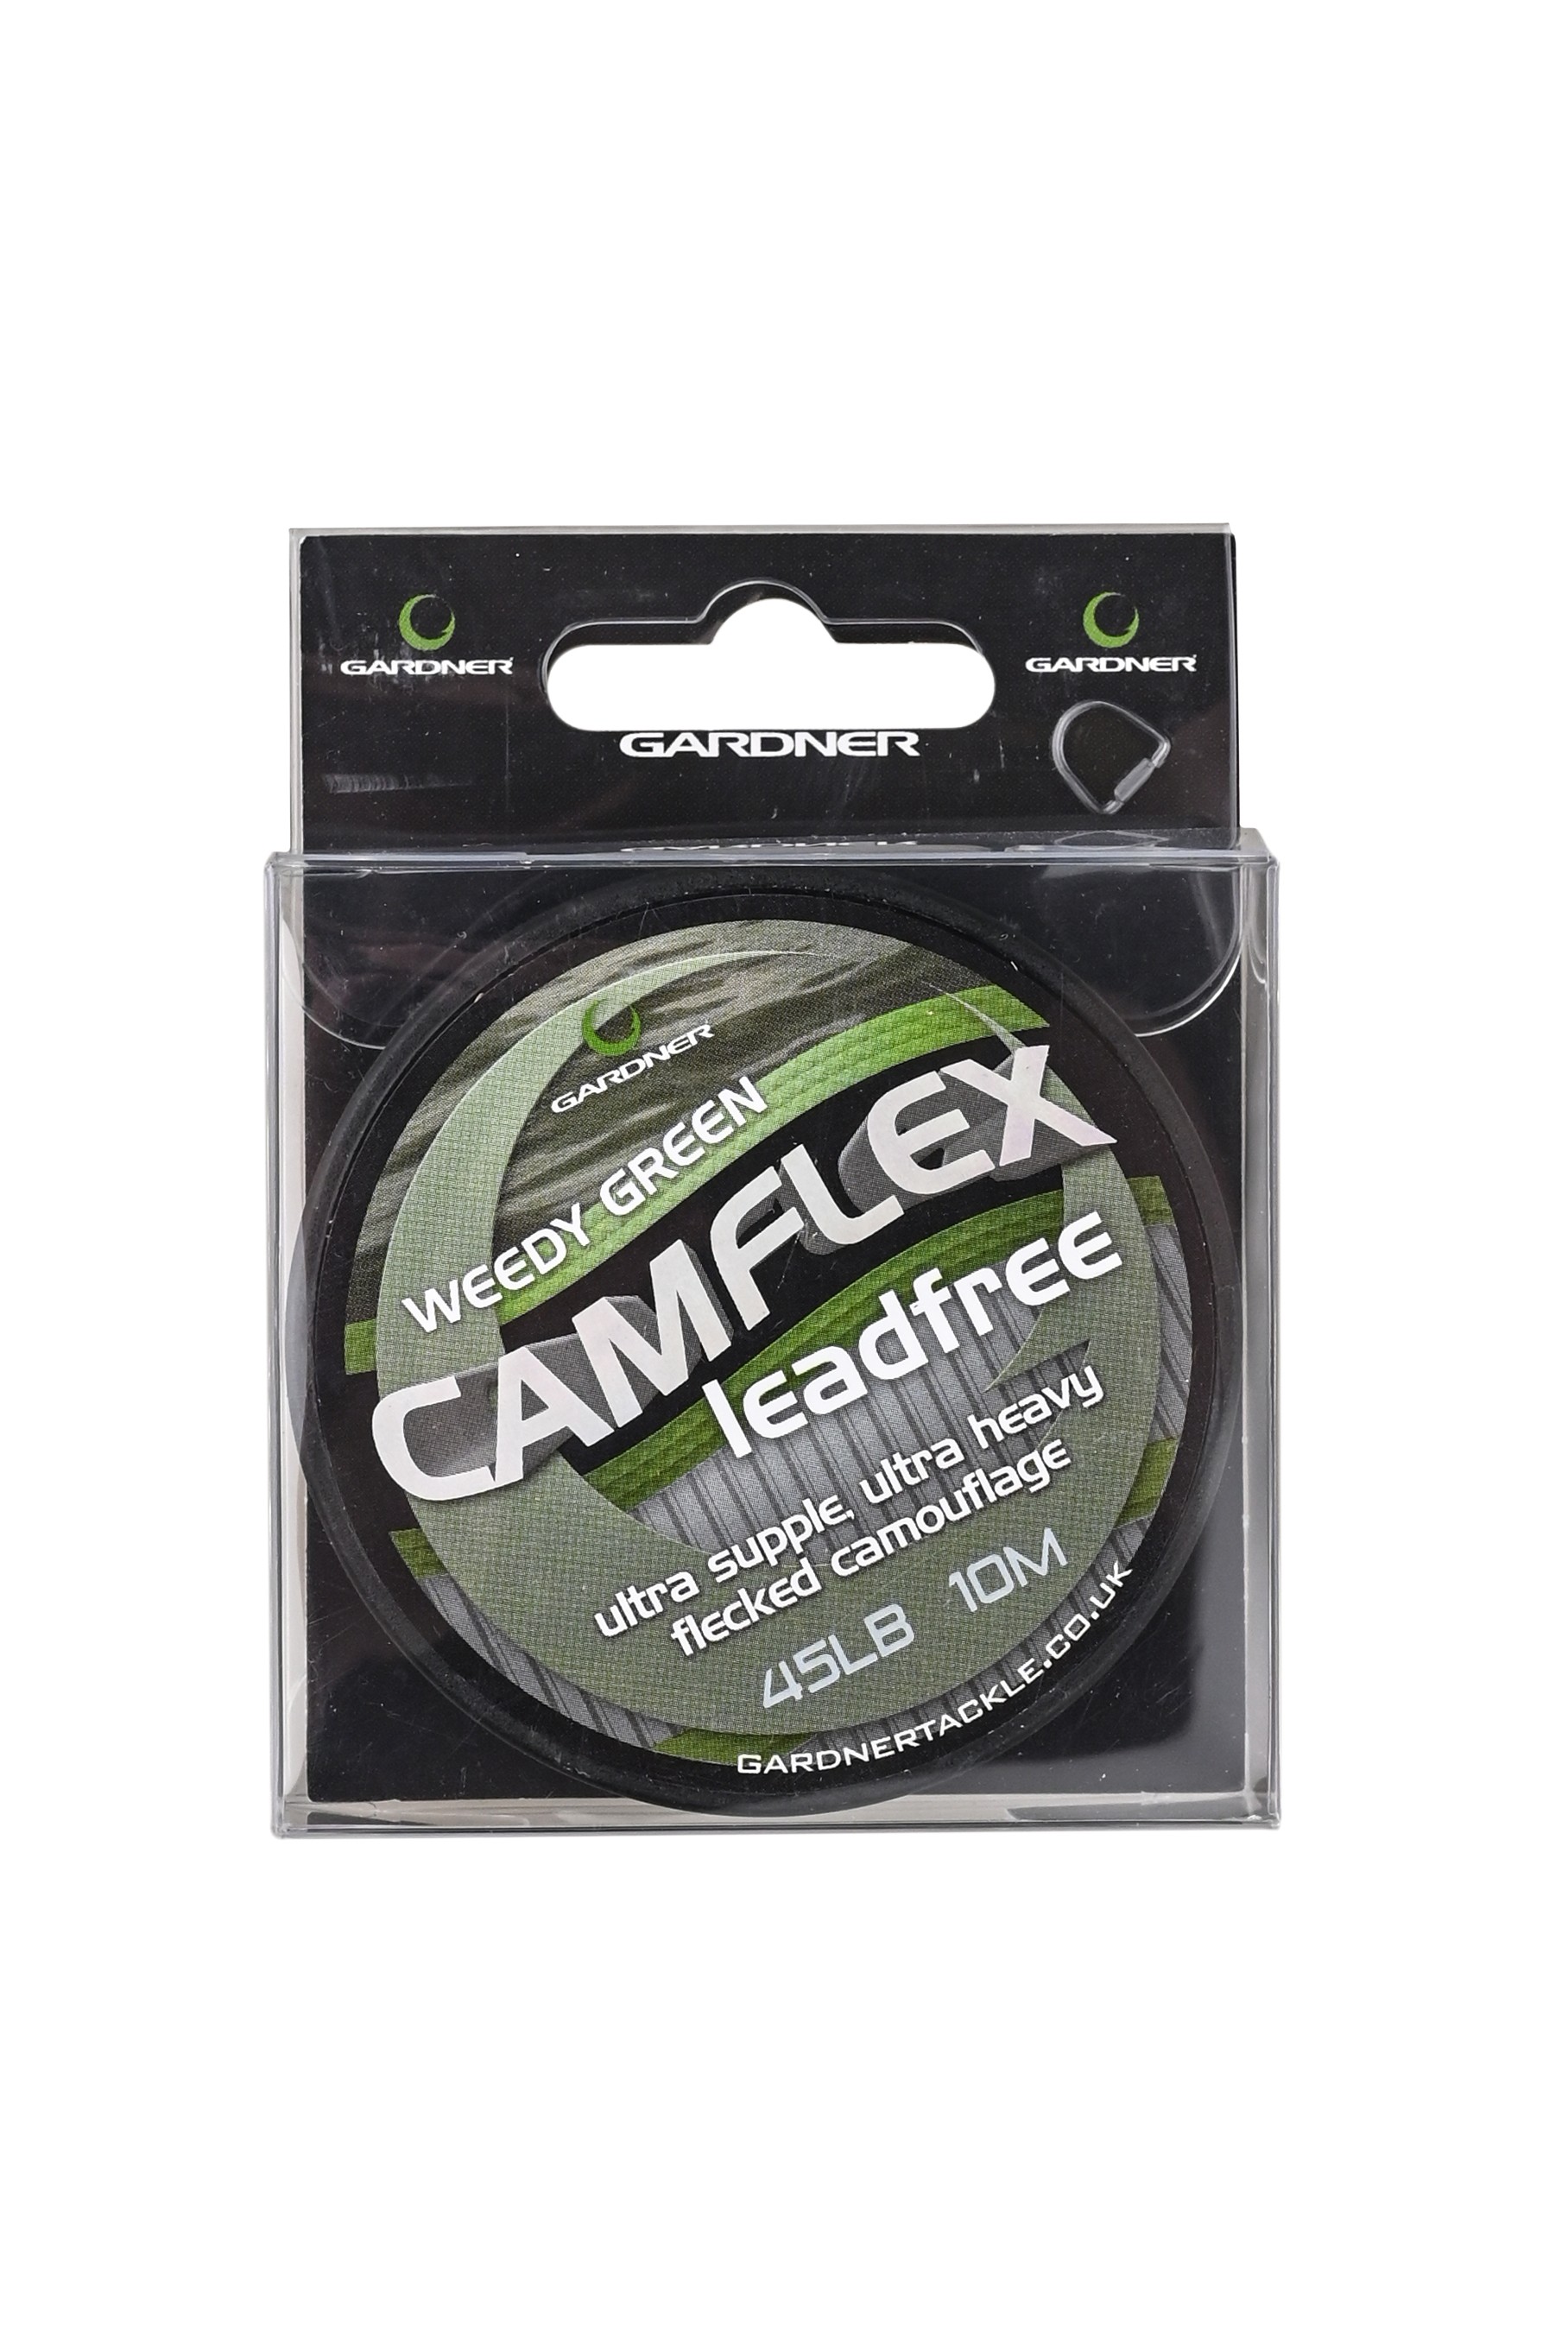 Лидкор Gardner Camflex leadfree weedy green 45lb - фото 1